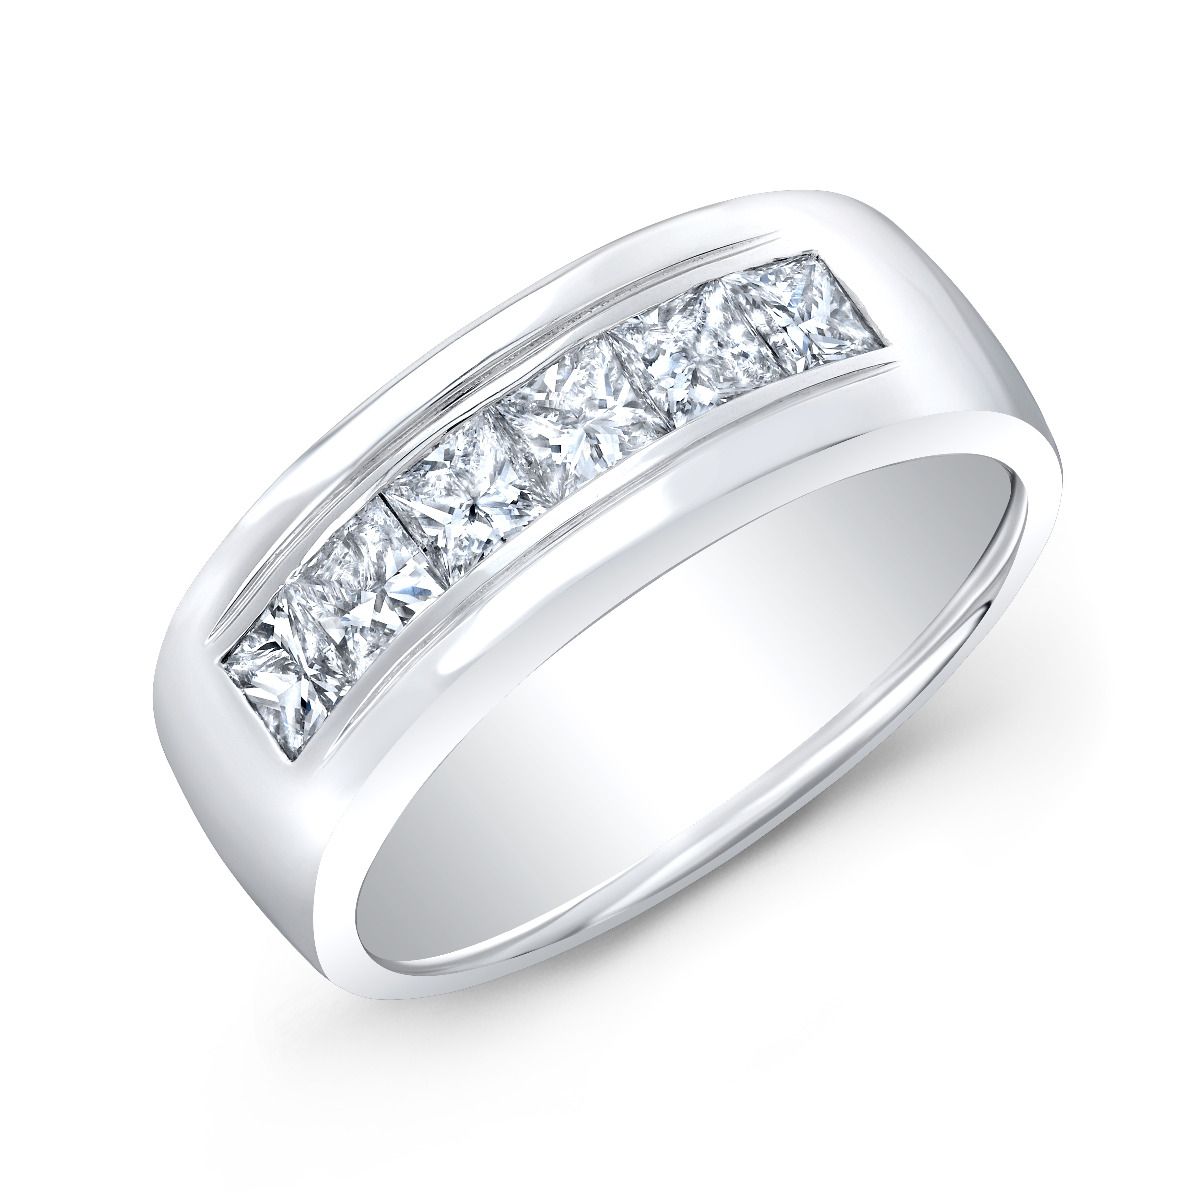 Men's 14k White Gold Princess Cut Channel Set Wedding Ring